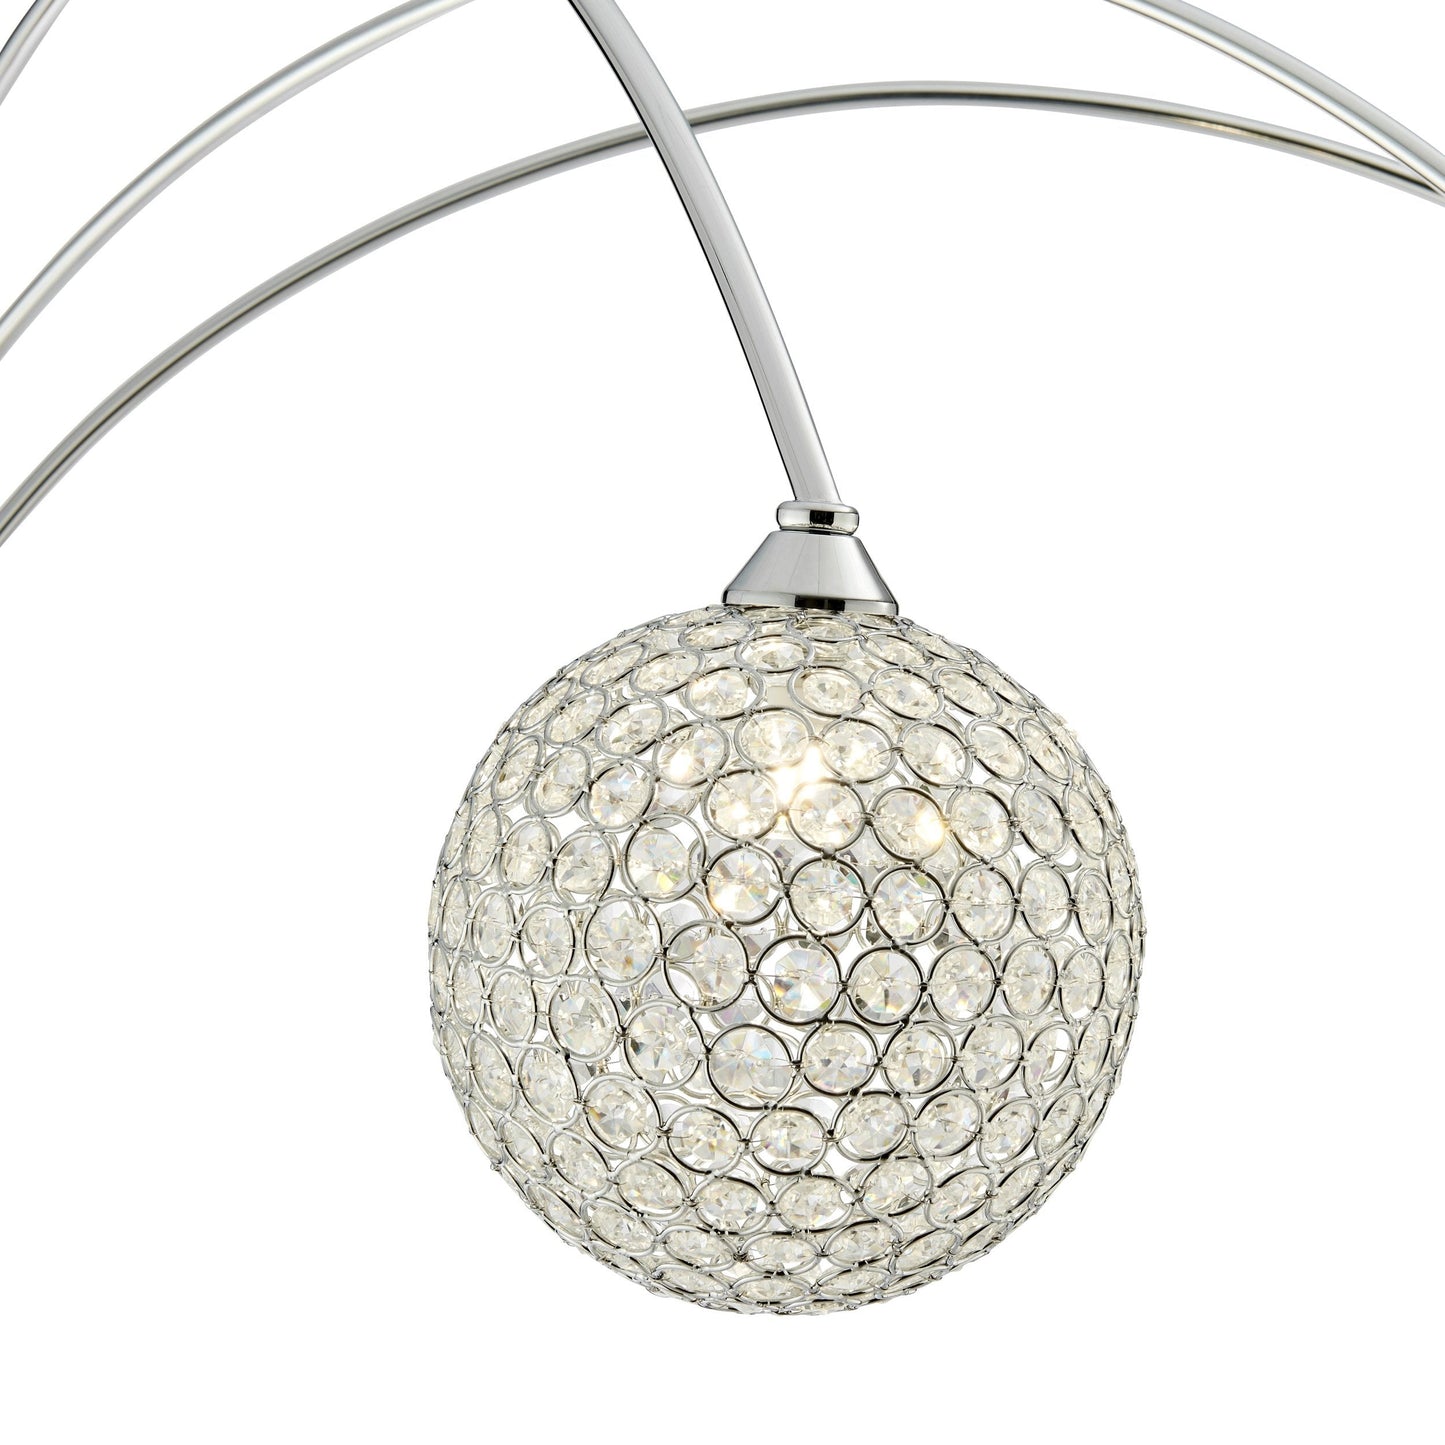 CHIMA Horizontal Crystal Spheres Floor Lamp